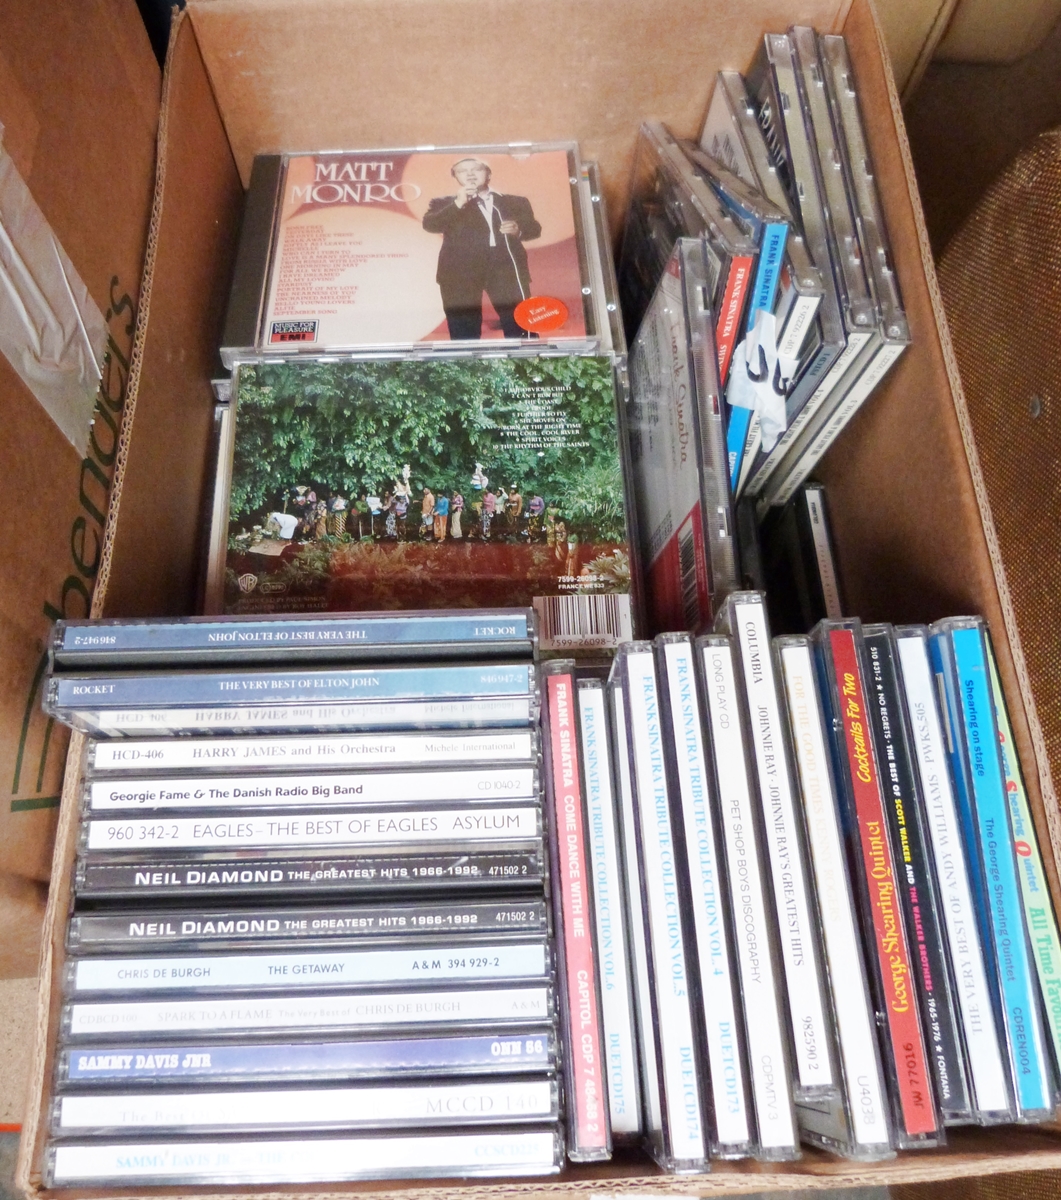 Large quantity of CDs to include Frank Sinatra, Matt Monro, Pet Shop Boys, etc (2 boxes).